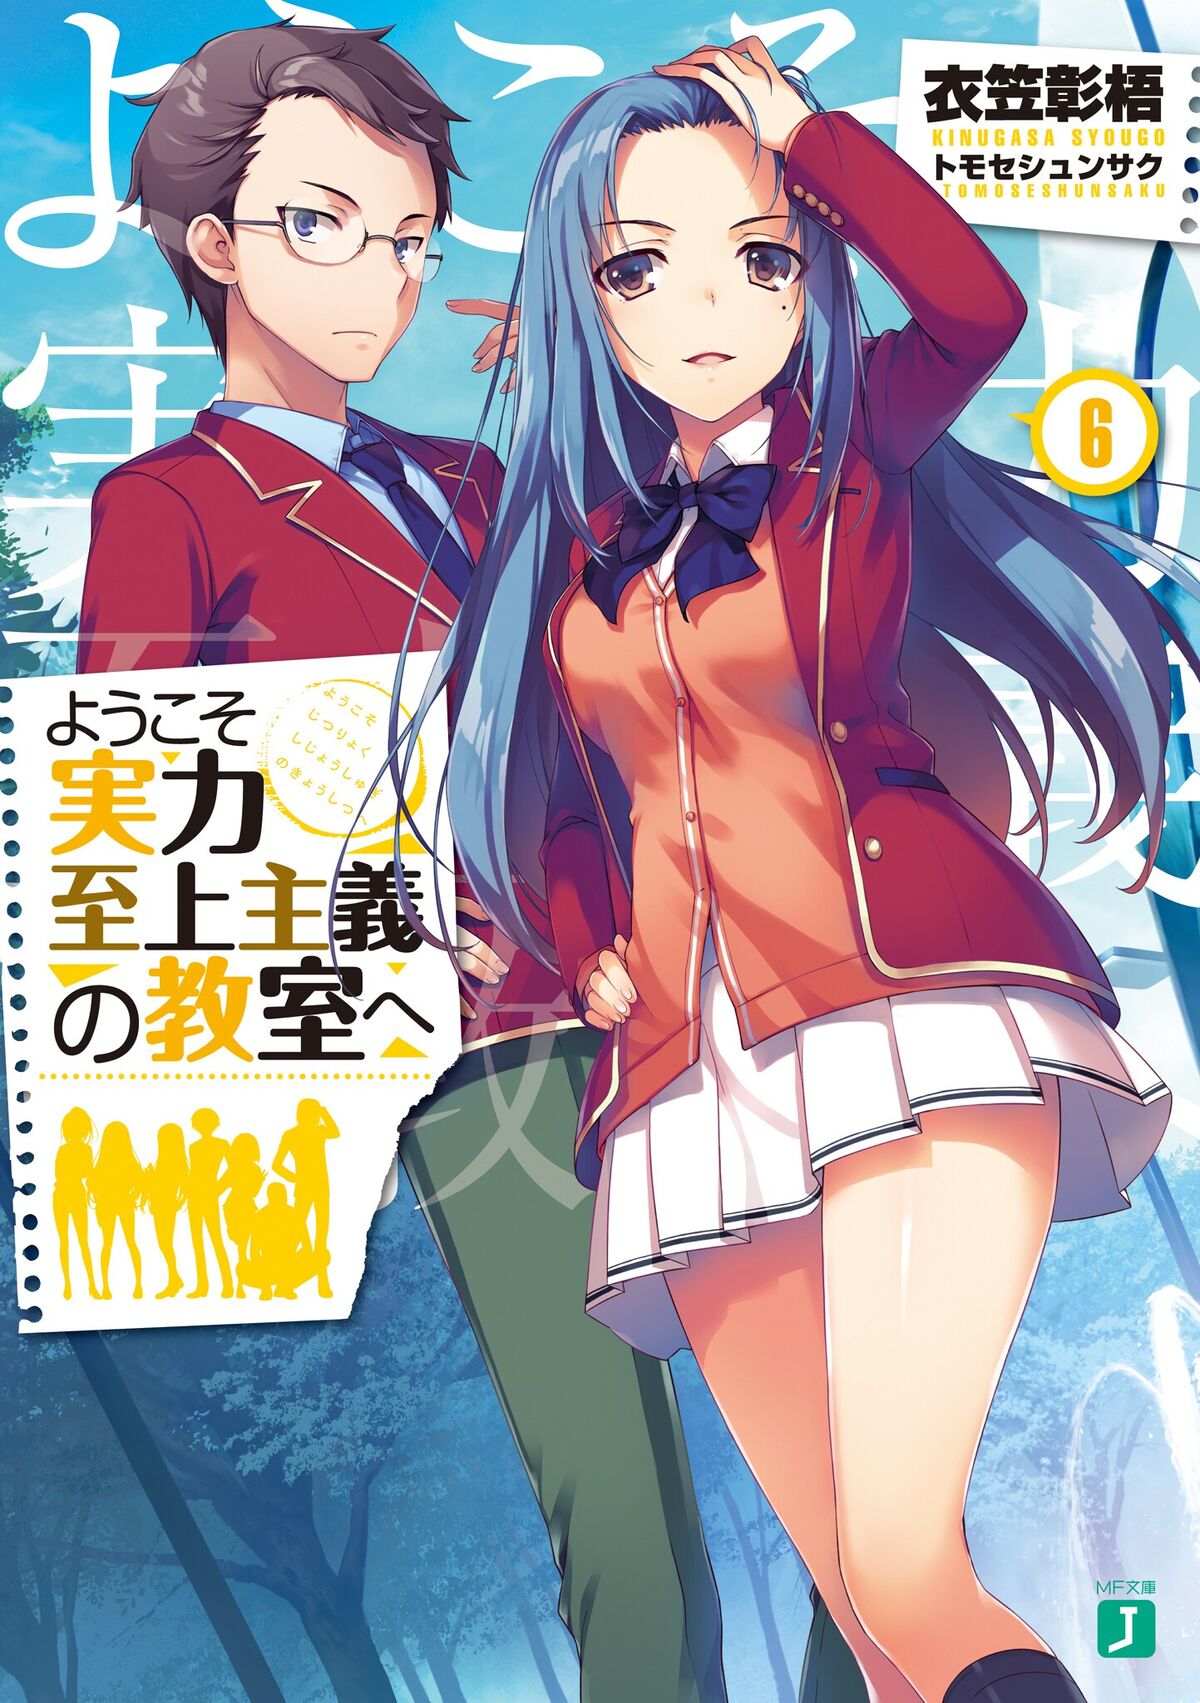 Light Novel Volume 9, You-Zitsu Wiki